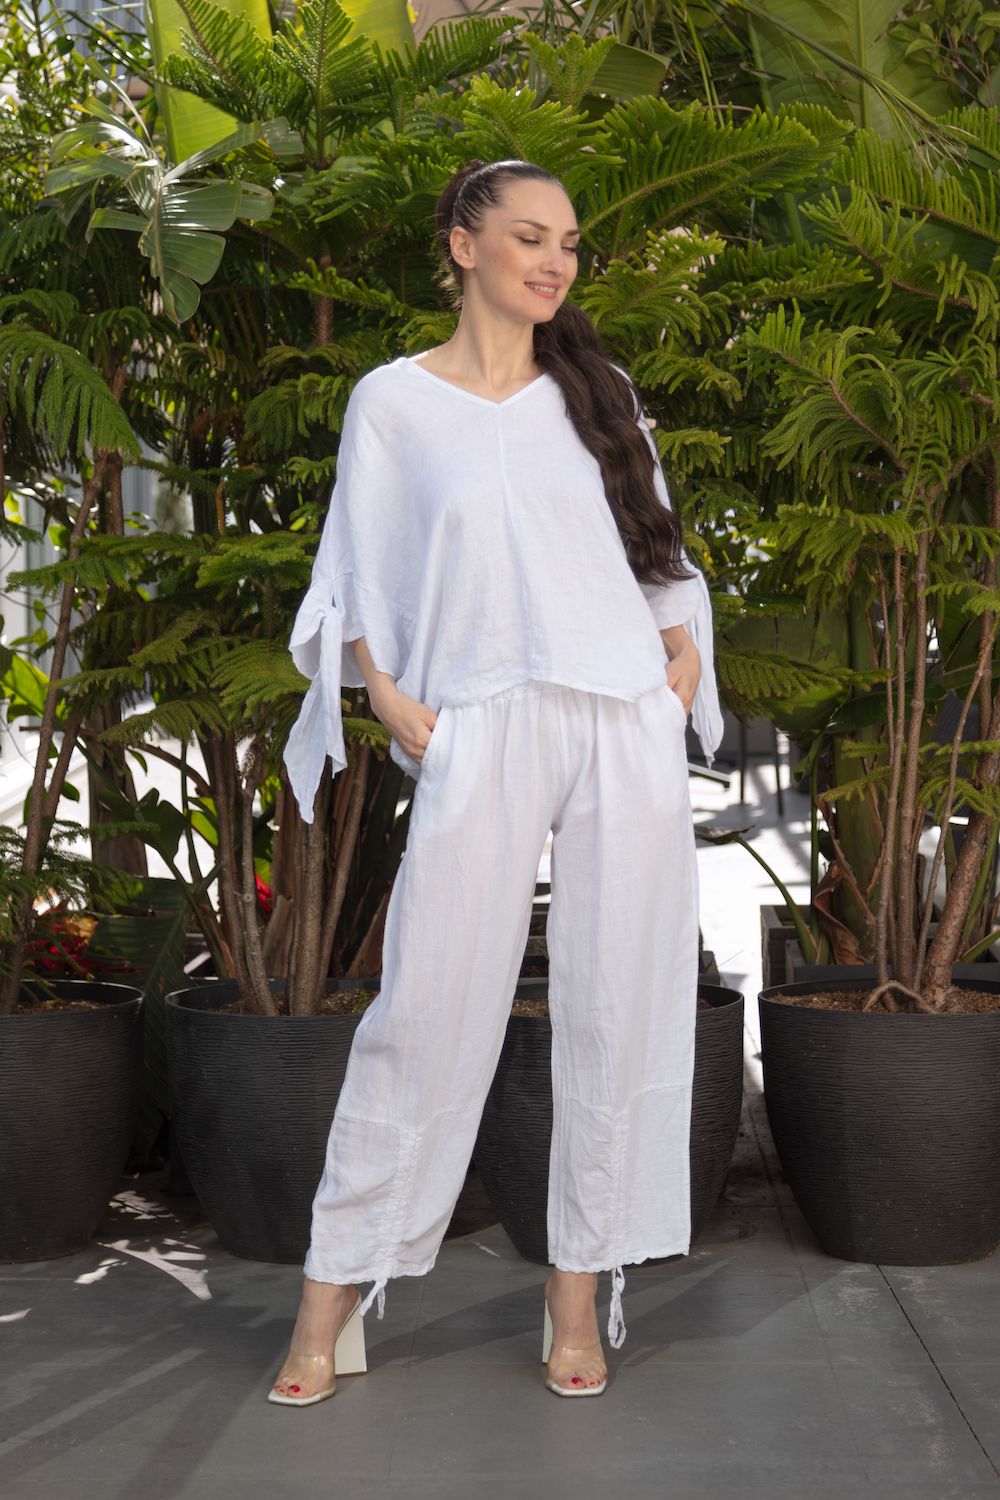 SAGA Teal Cotton Made in Italy Size MEDIUM (M) Dress – ReturnStyle